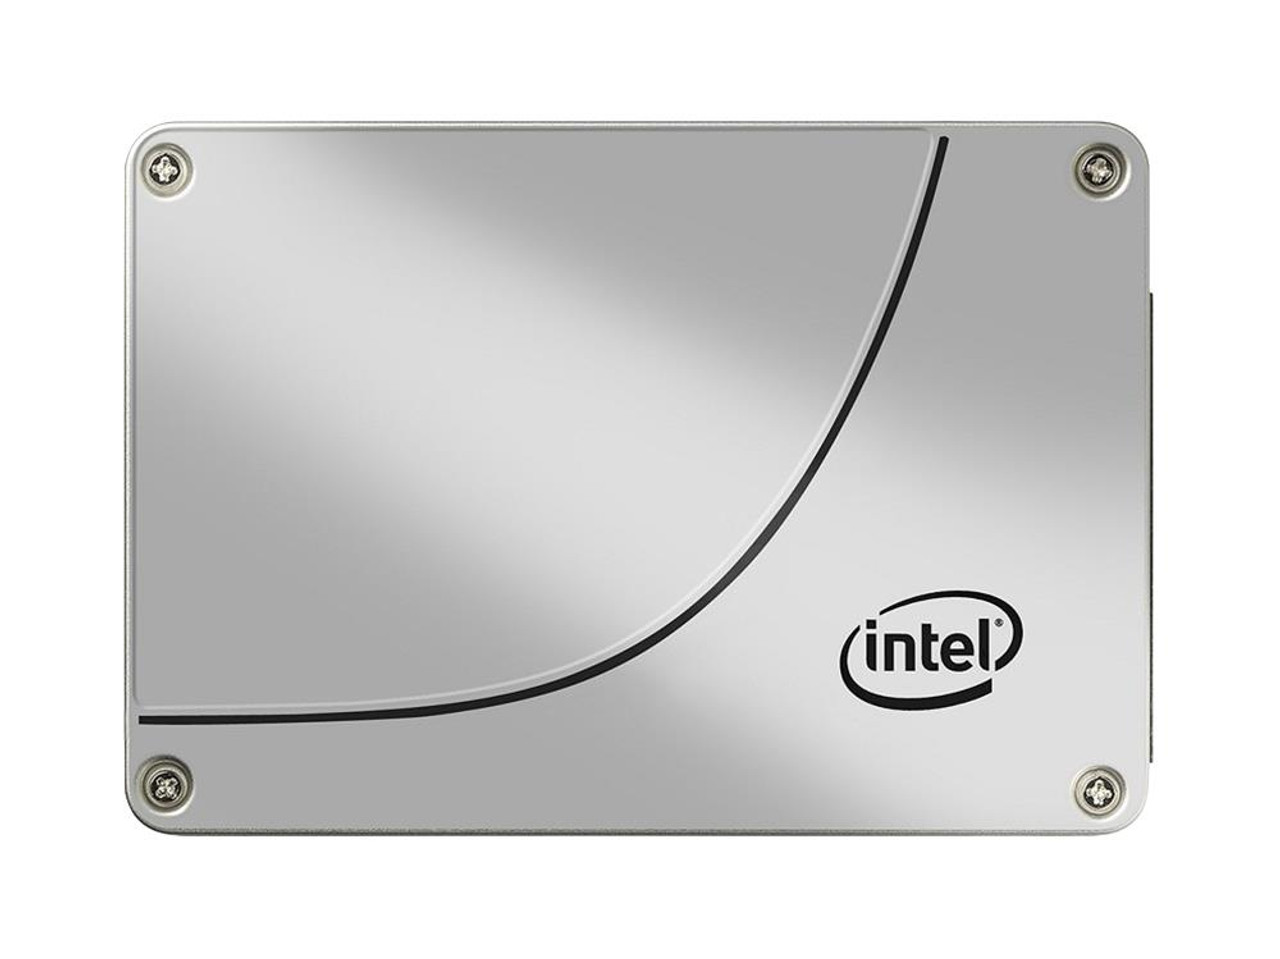 SSDSA2CW160G3K5 Intel 320 Series 160GB MLC SATA 3Gbps 2.5-inch Internal Solid State Drive (SSD)